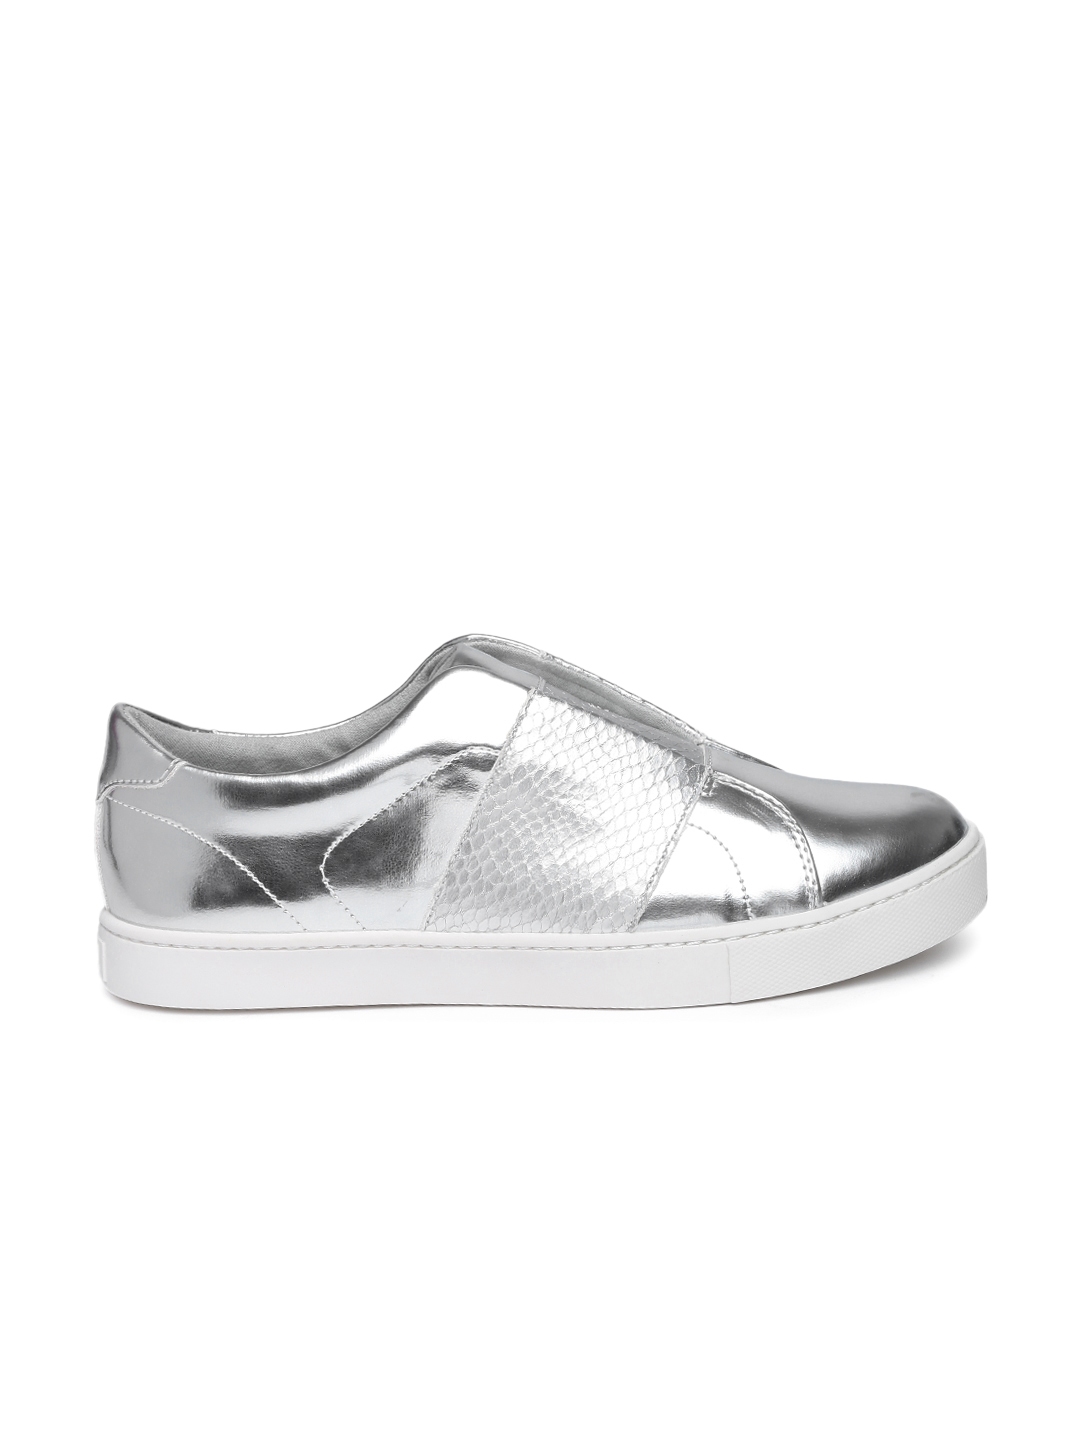 Buy ALDO Women Silver Toned Slip On Sneakers - Casual Shoes for Women ...